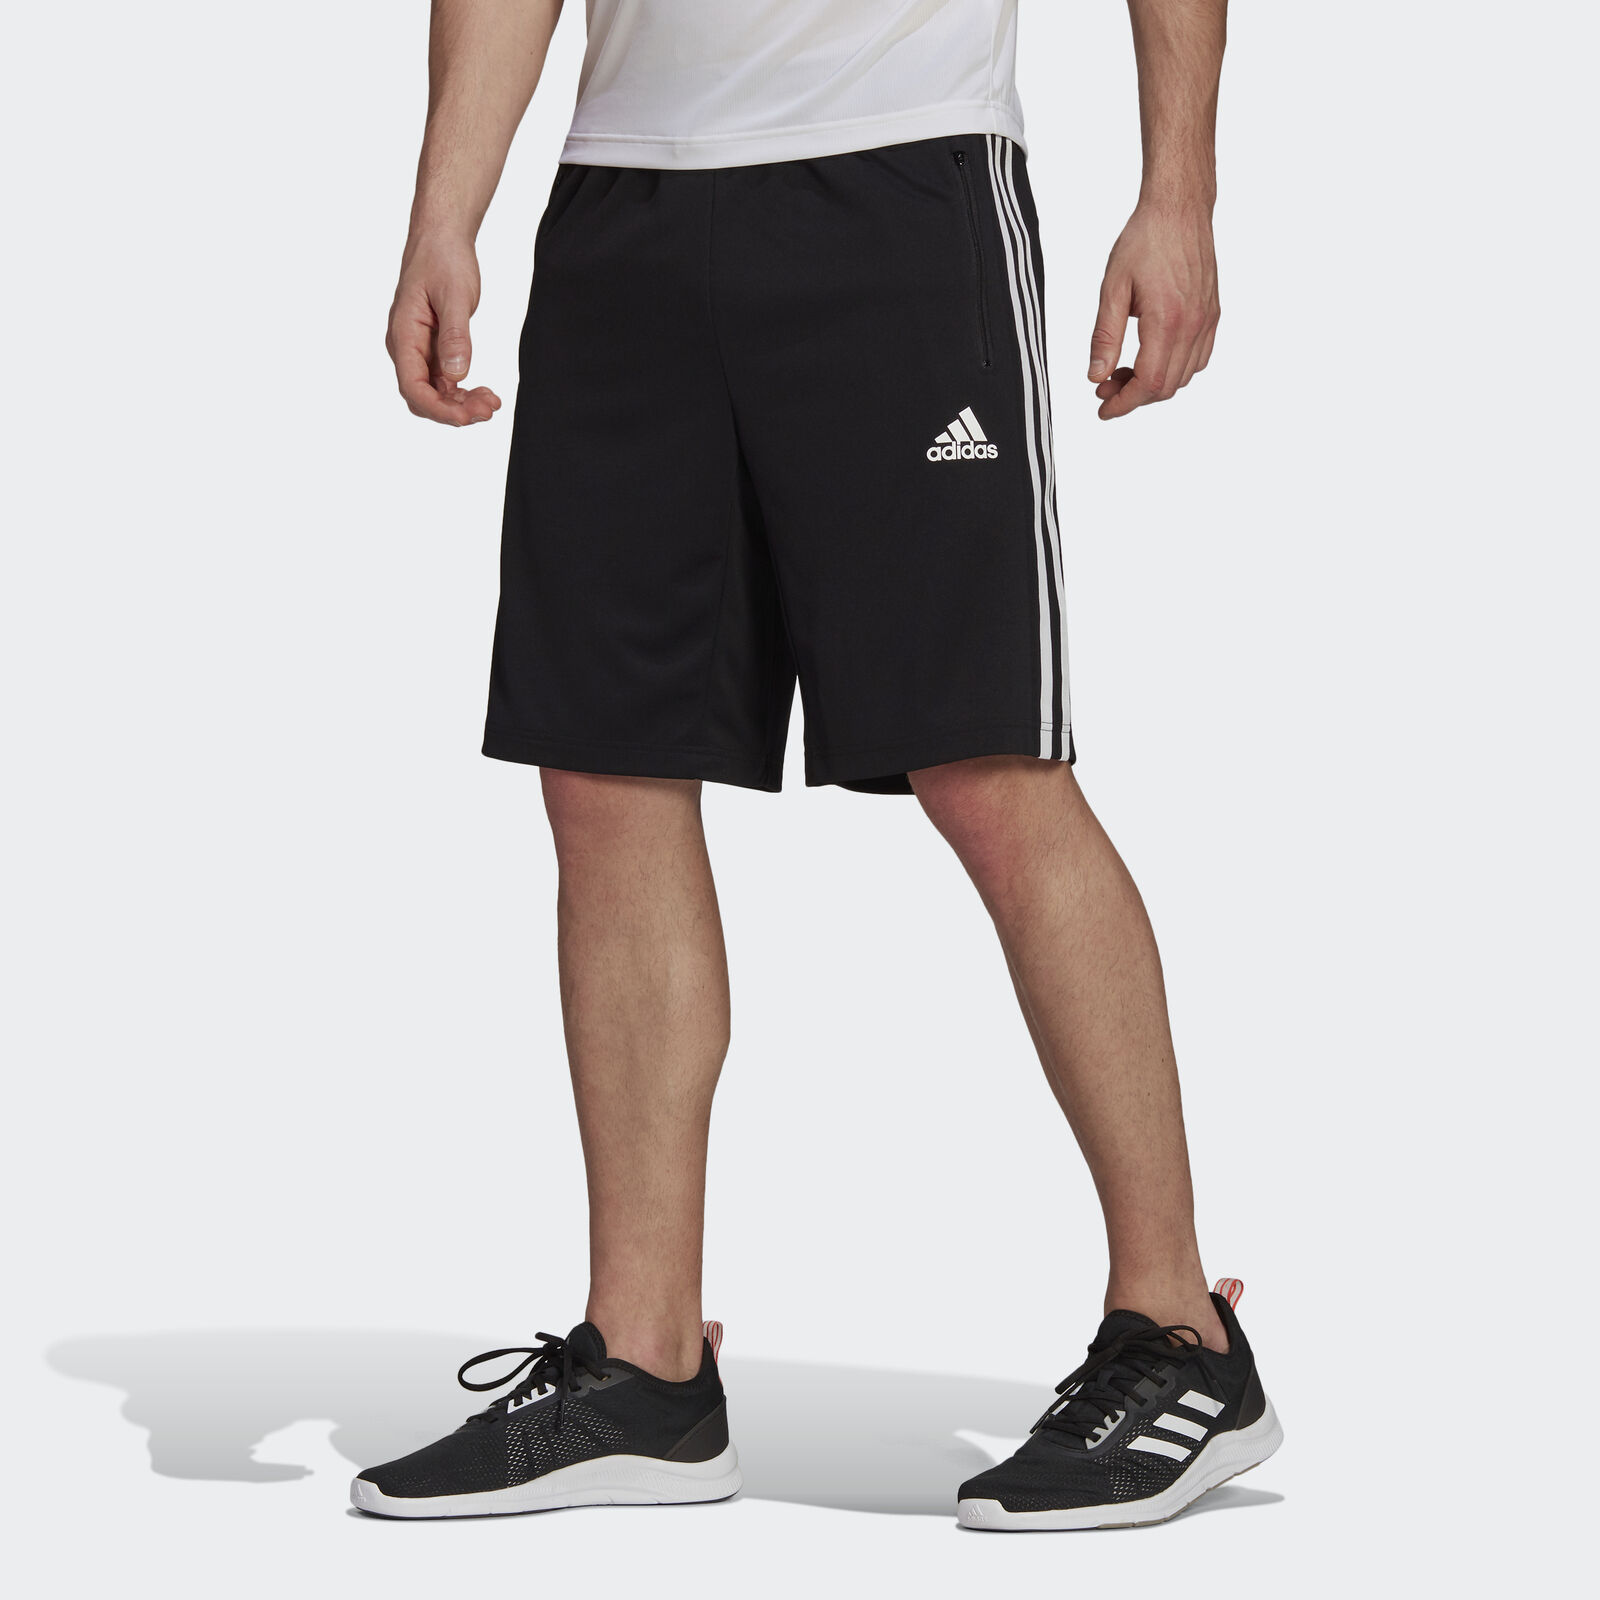 Adidas Men's 3-Stripes Primeblue Shorts